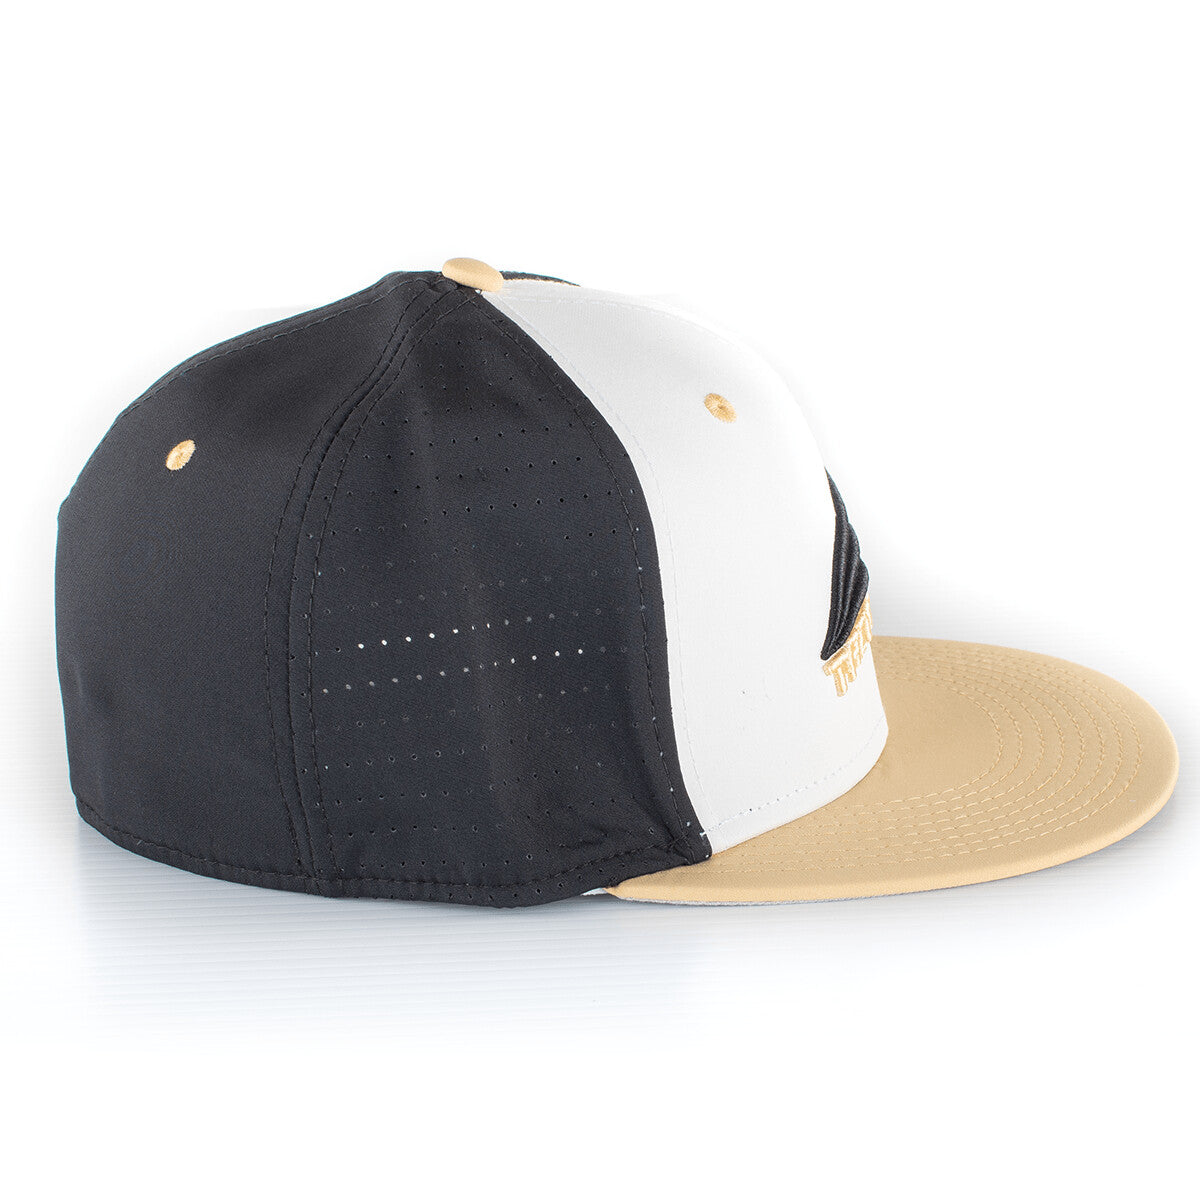 Triton Performance FlexFit Hat (Black/Vegas Gold)